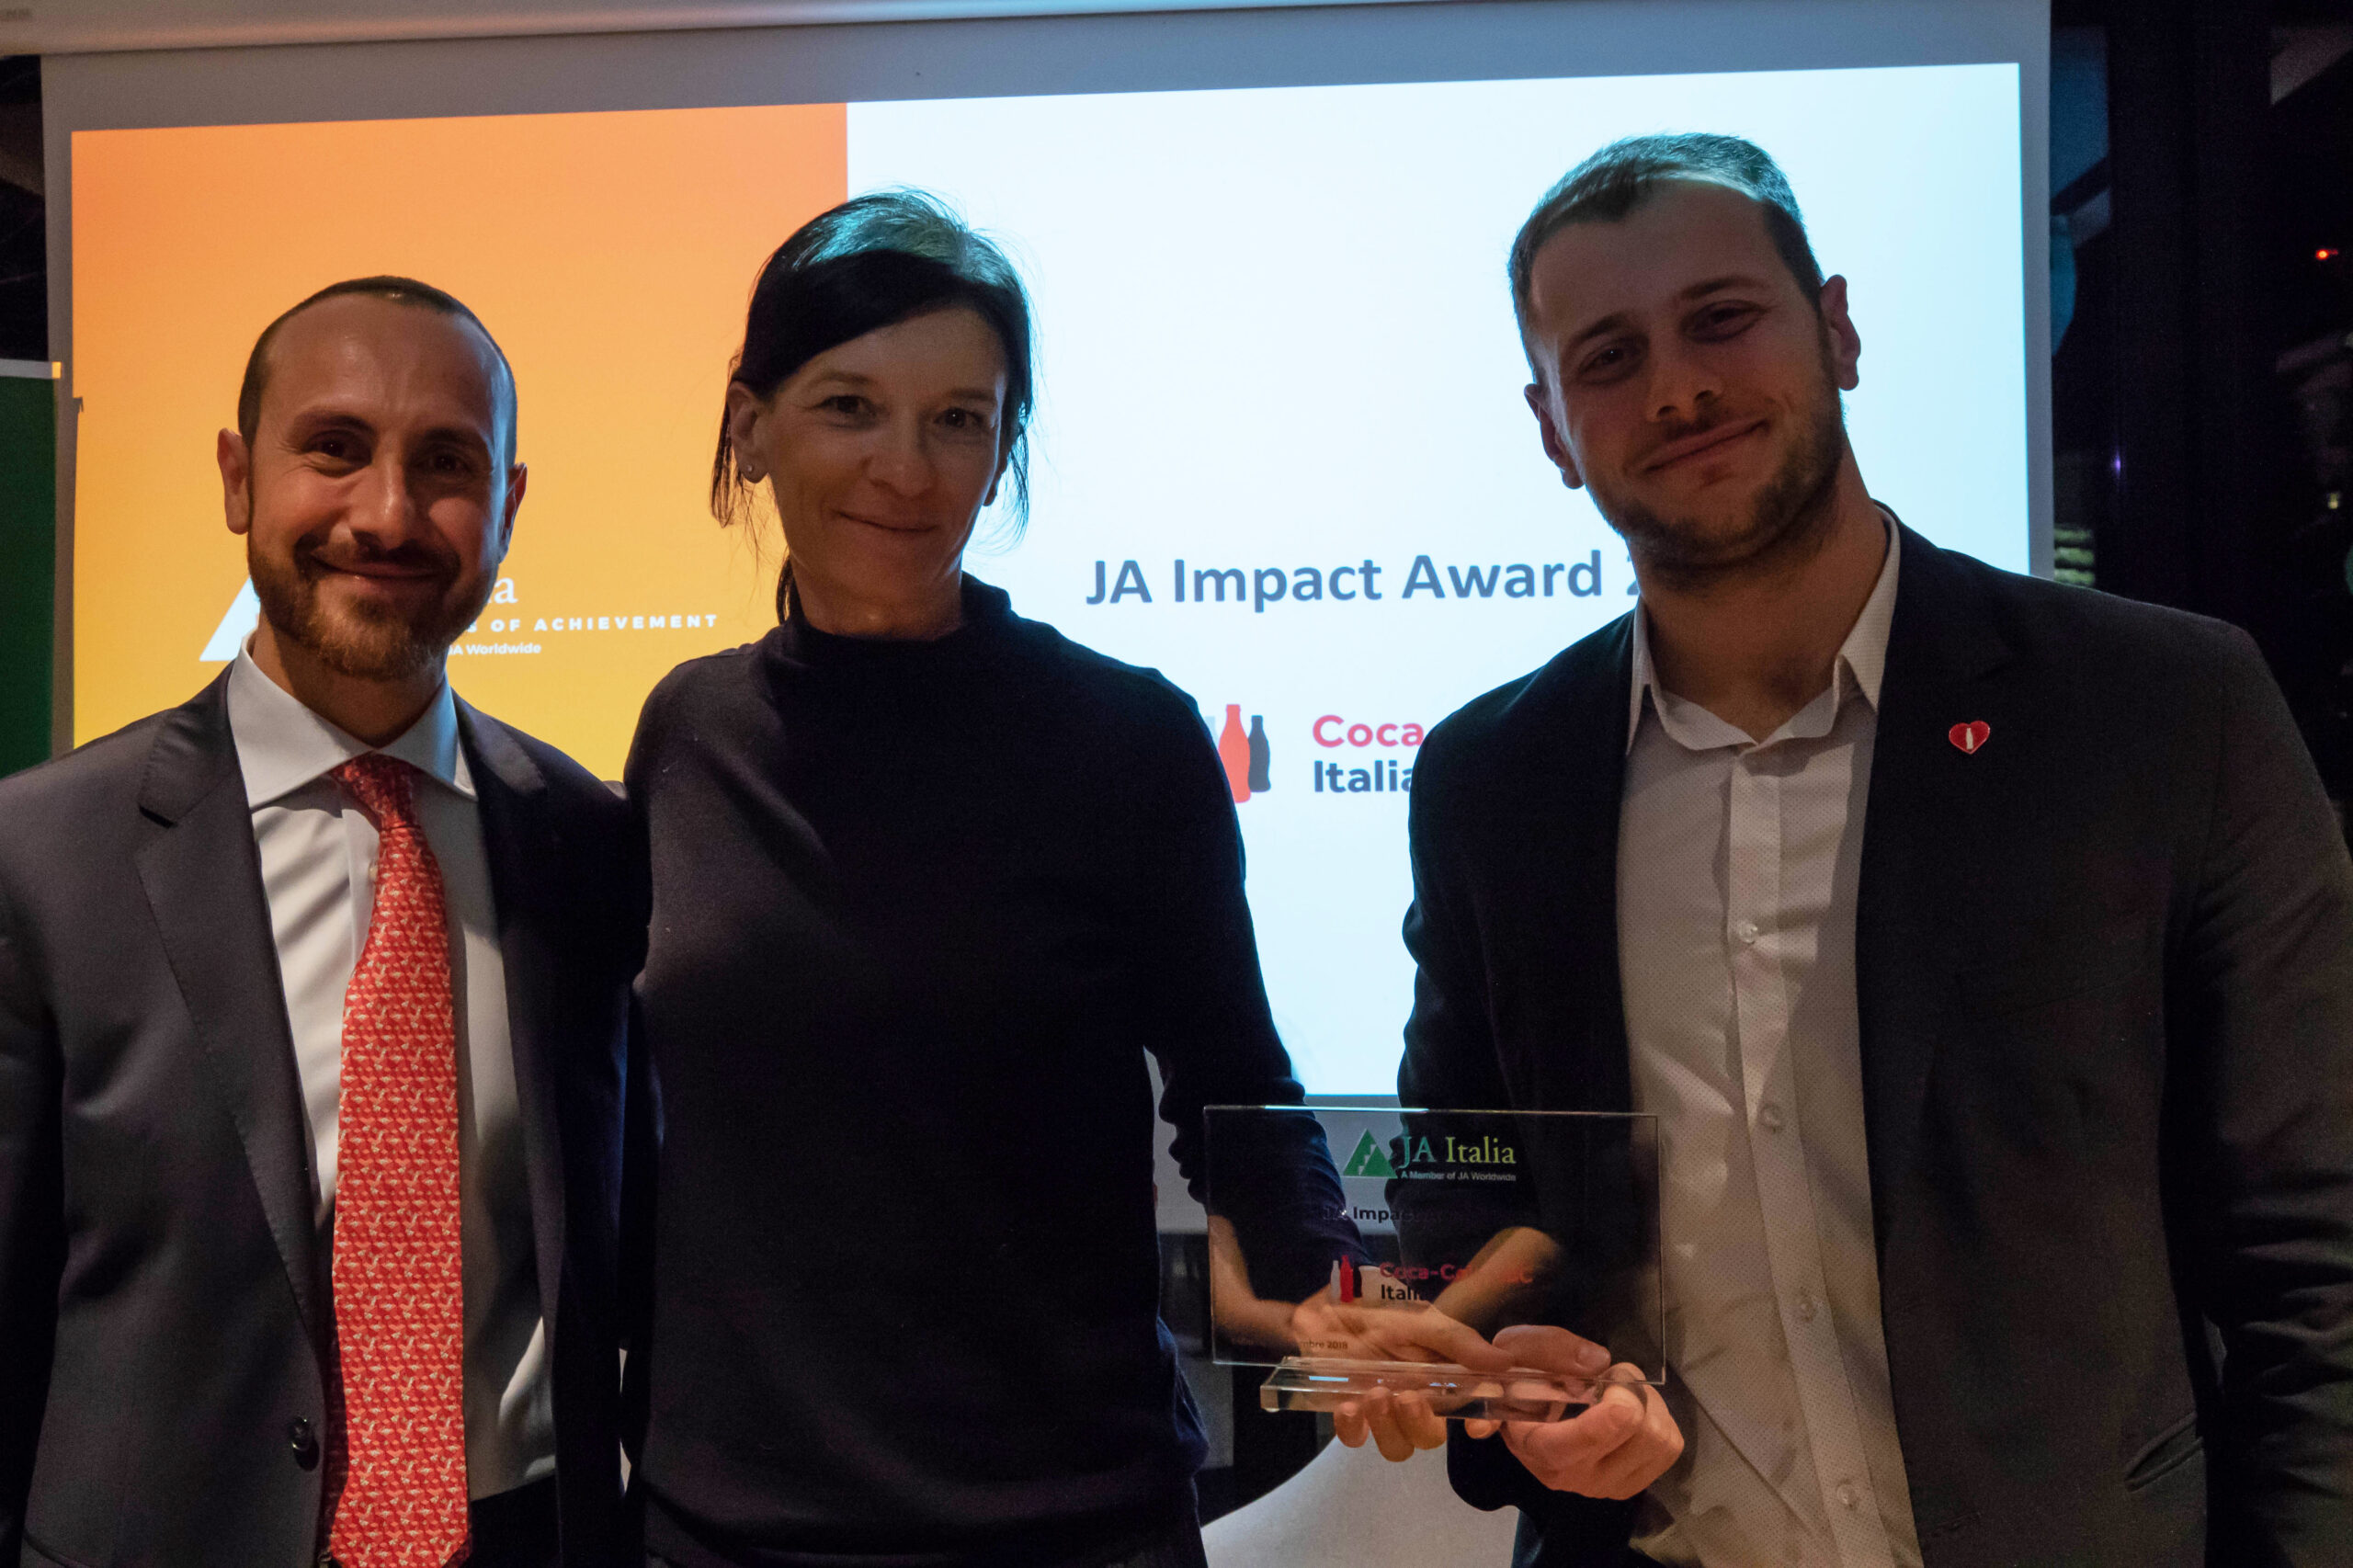 Coca-cola Italia JA Impact Award 2018